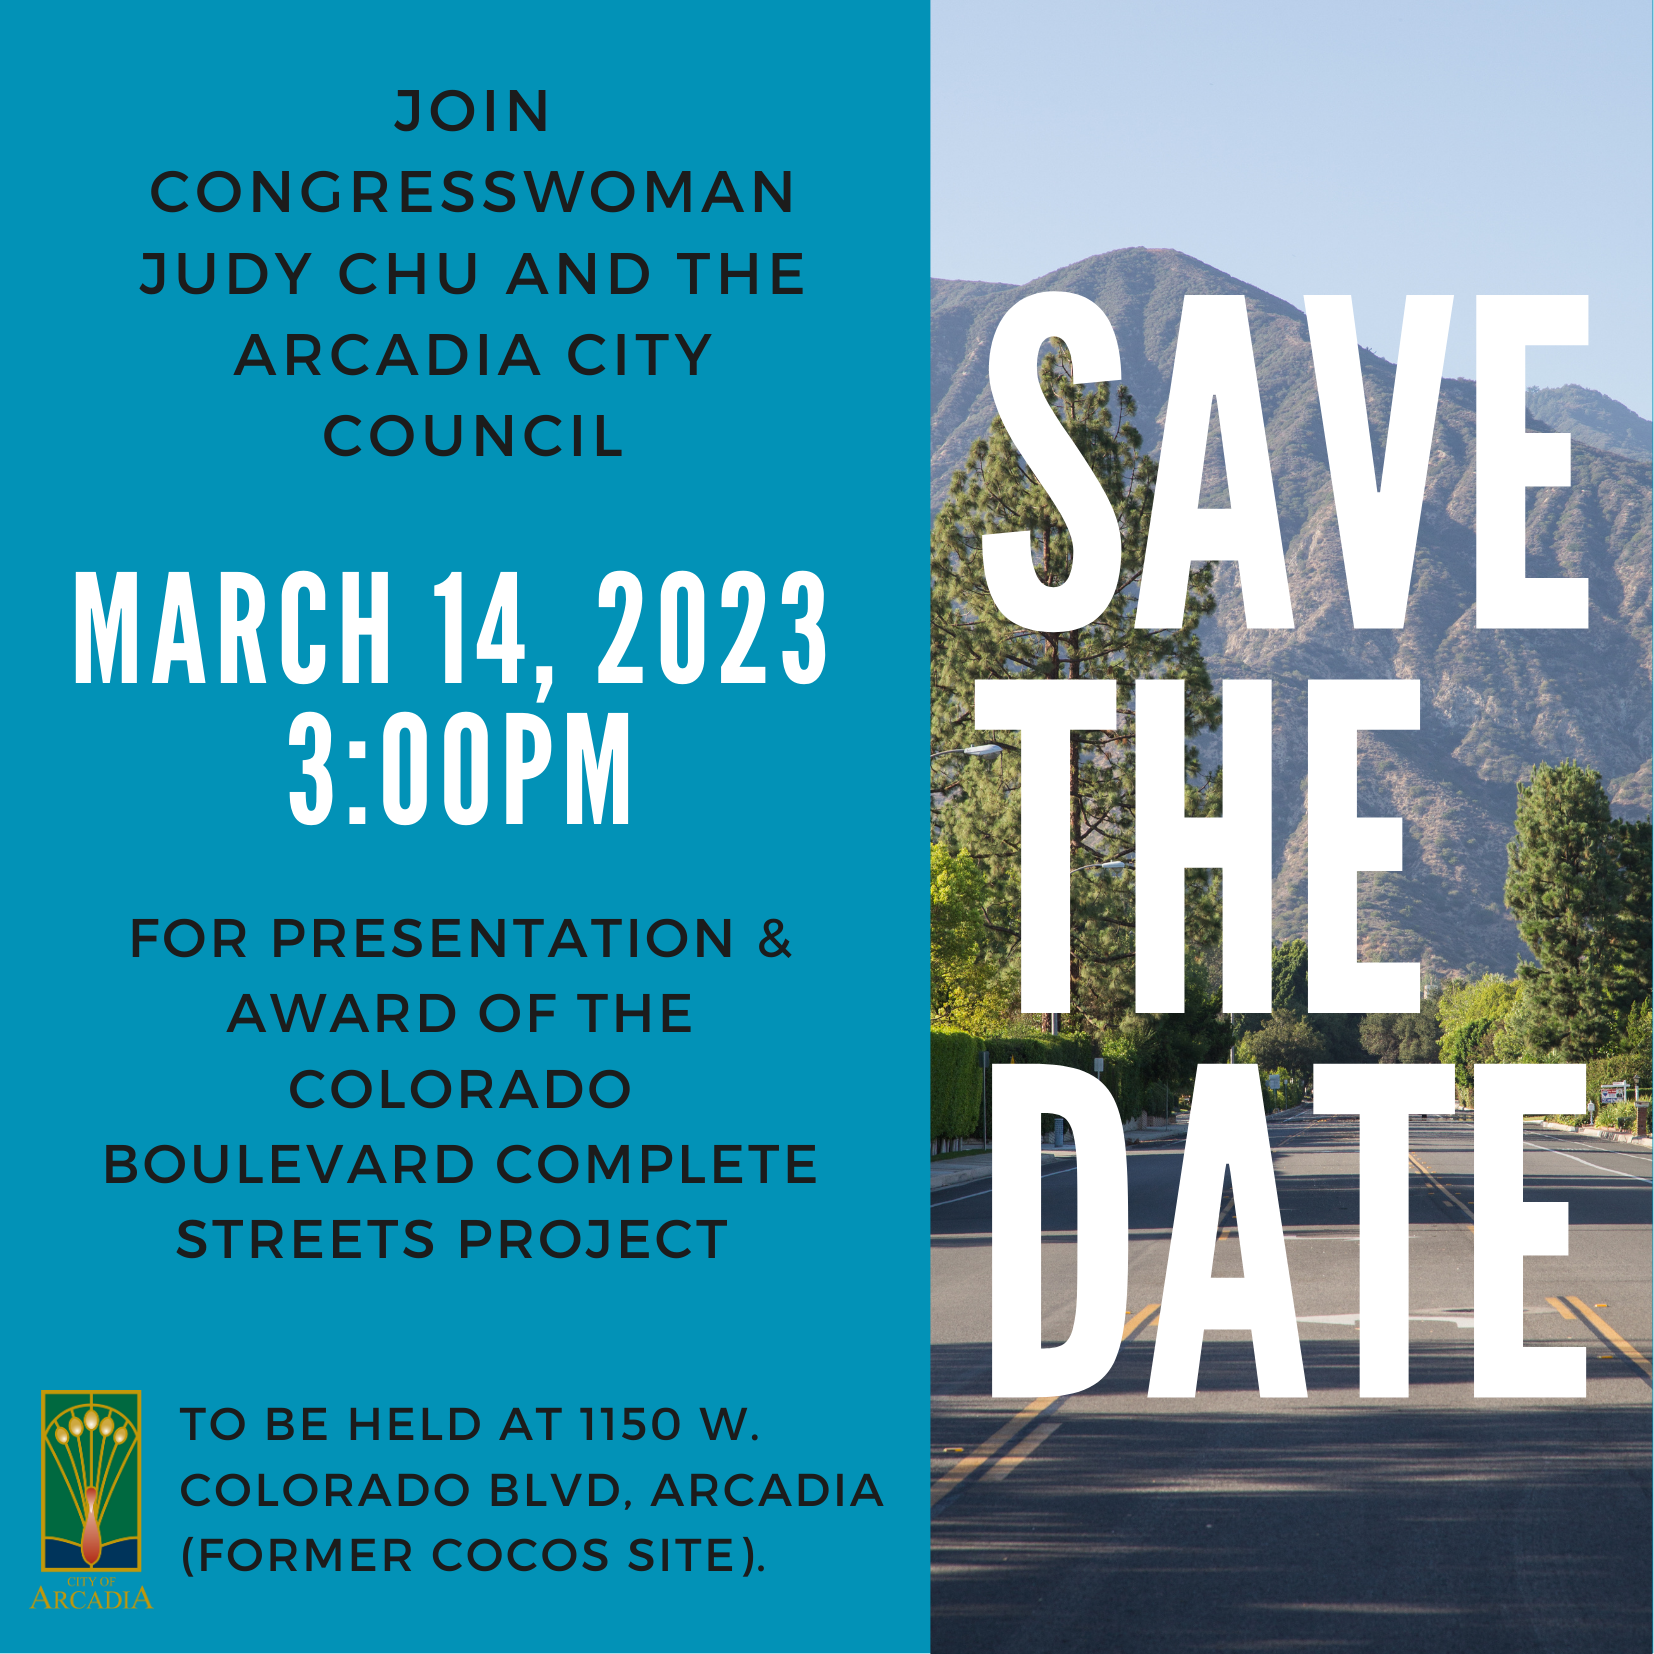 Colorado Boulevard Complete Streets Project invite 